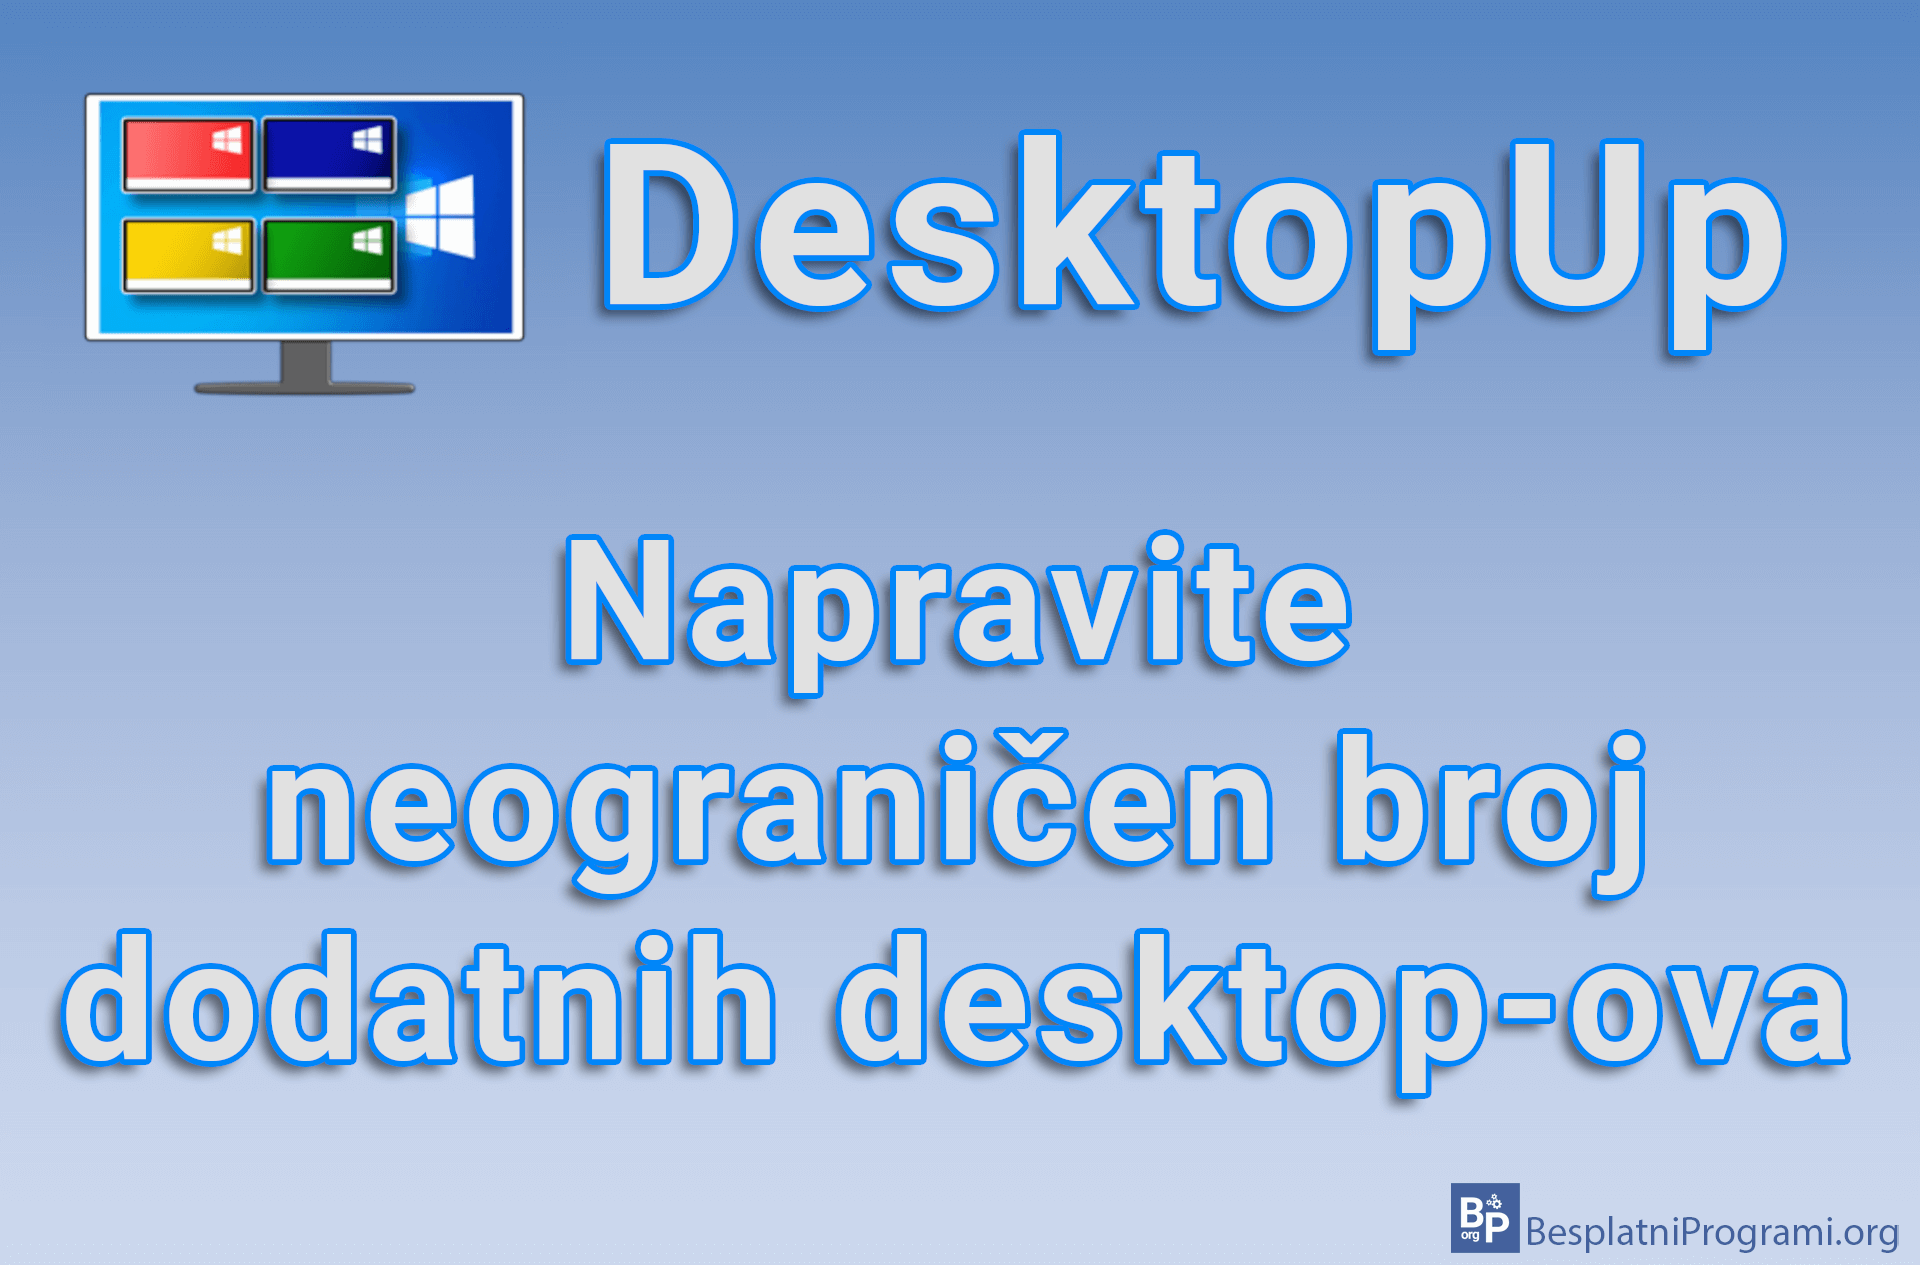 DesktopUp – Napravite neograničen broj dodatnih desktop-ova